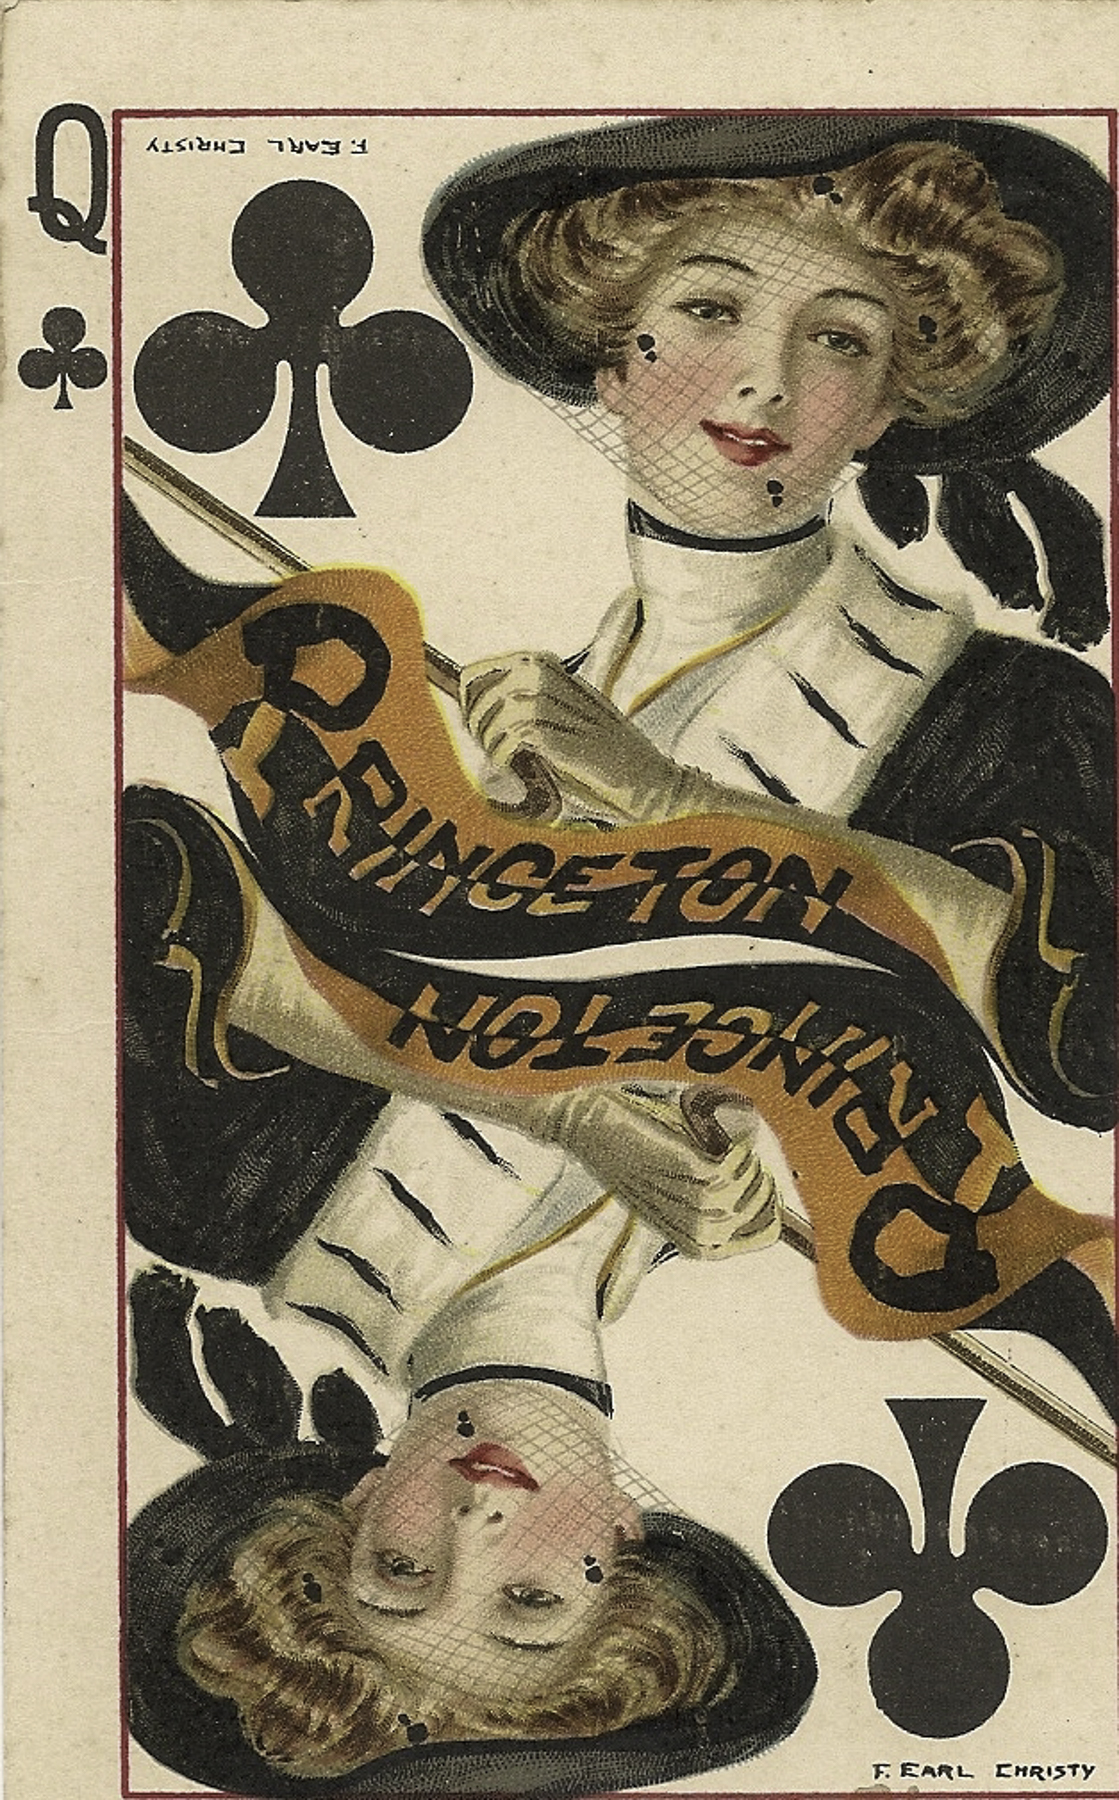 Princeton Girl Postcard Front